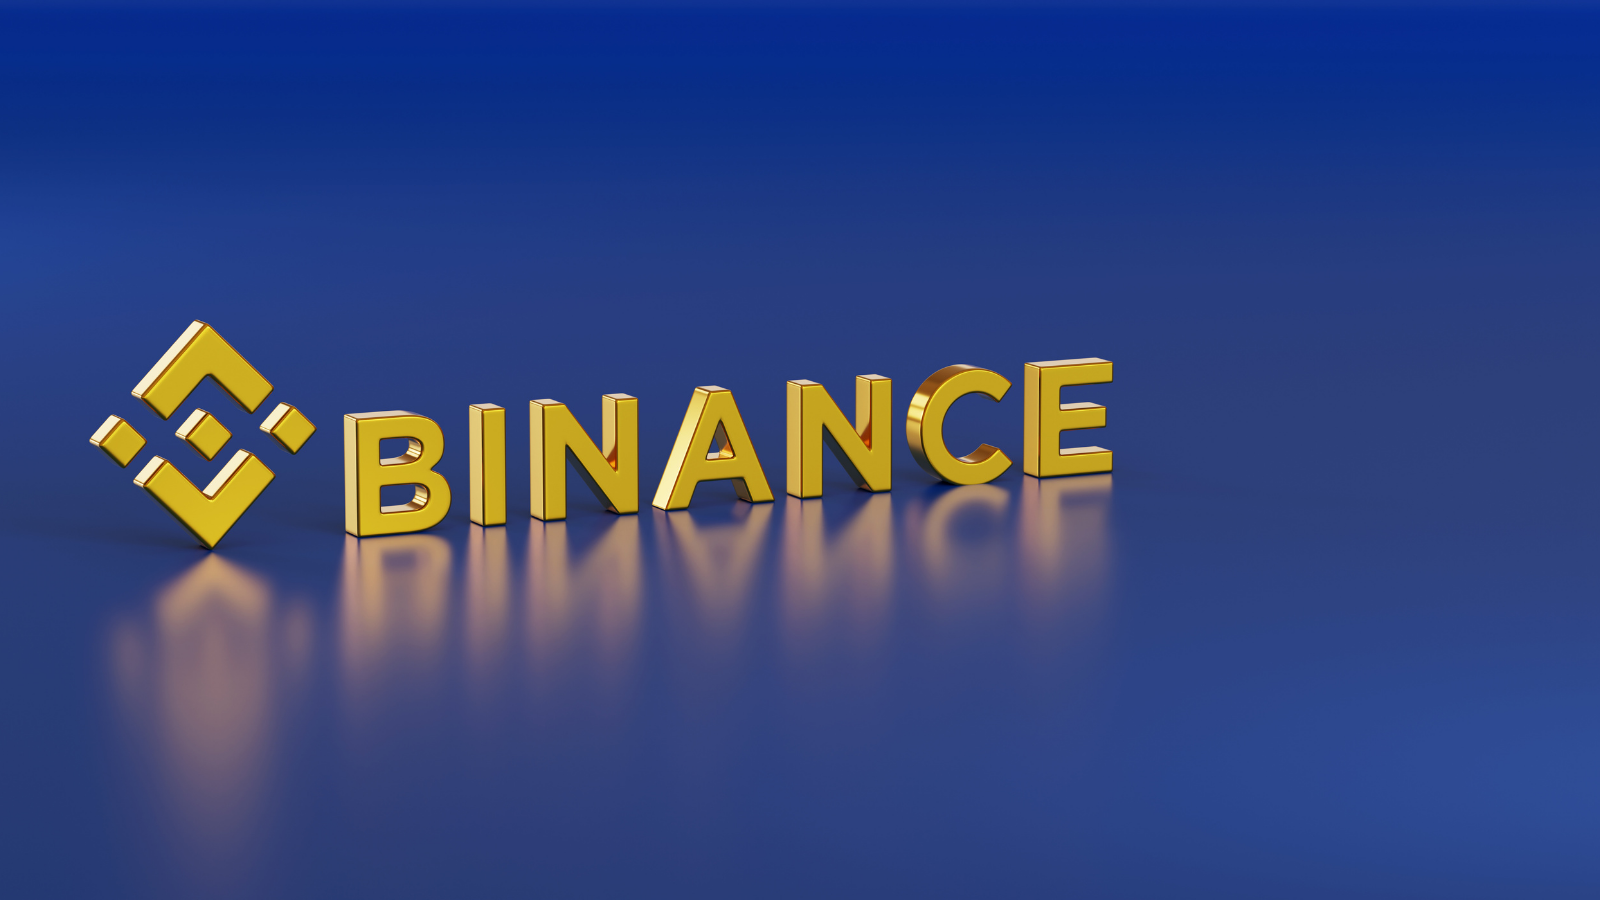 Binance (BNB) cryptocurrency